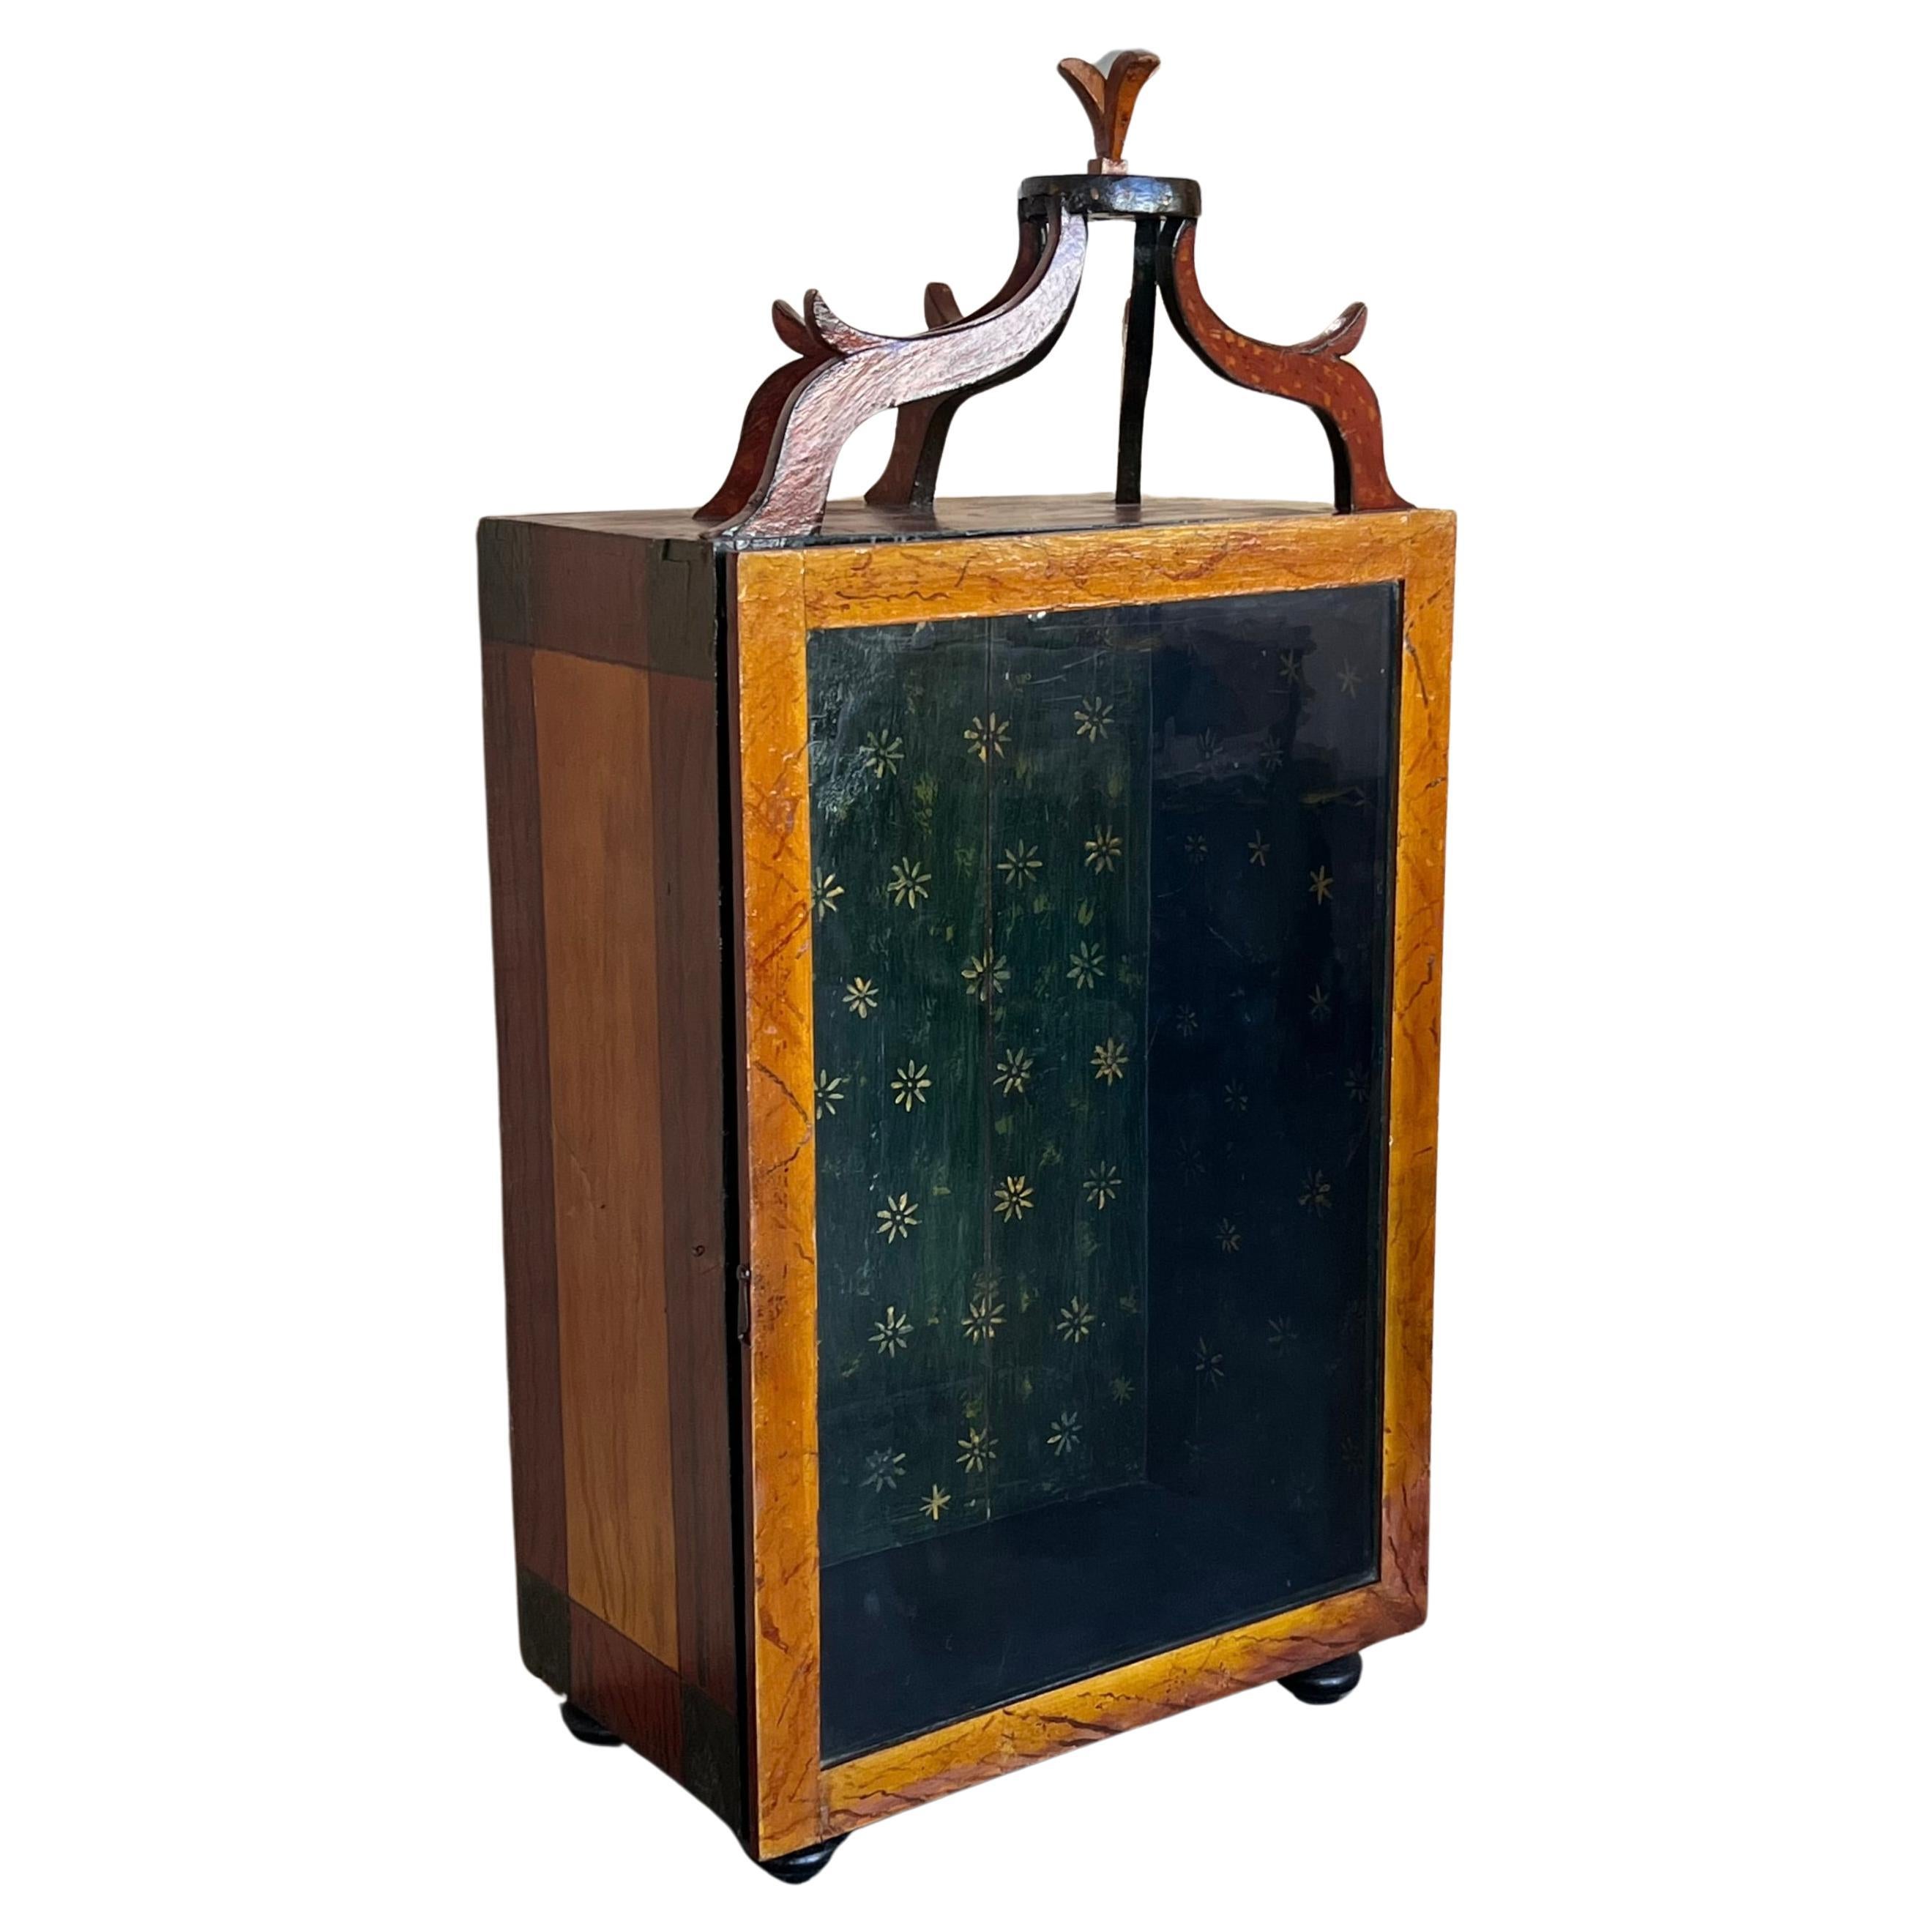 Vitrine de table italienne du 19e siècle en noyer avec porte en verre